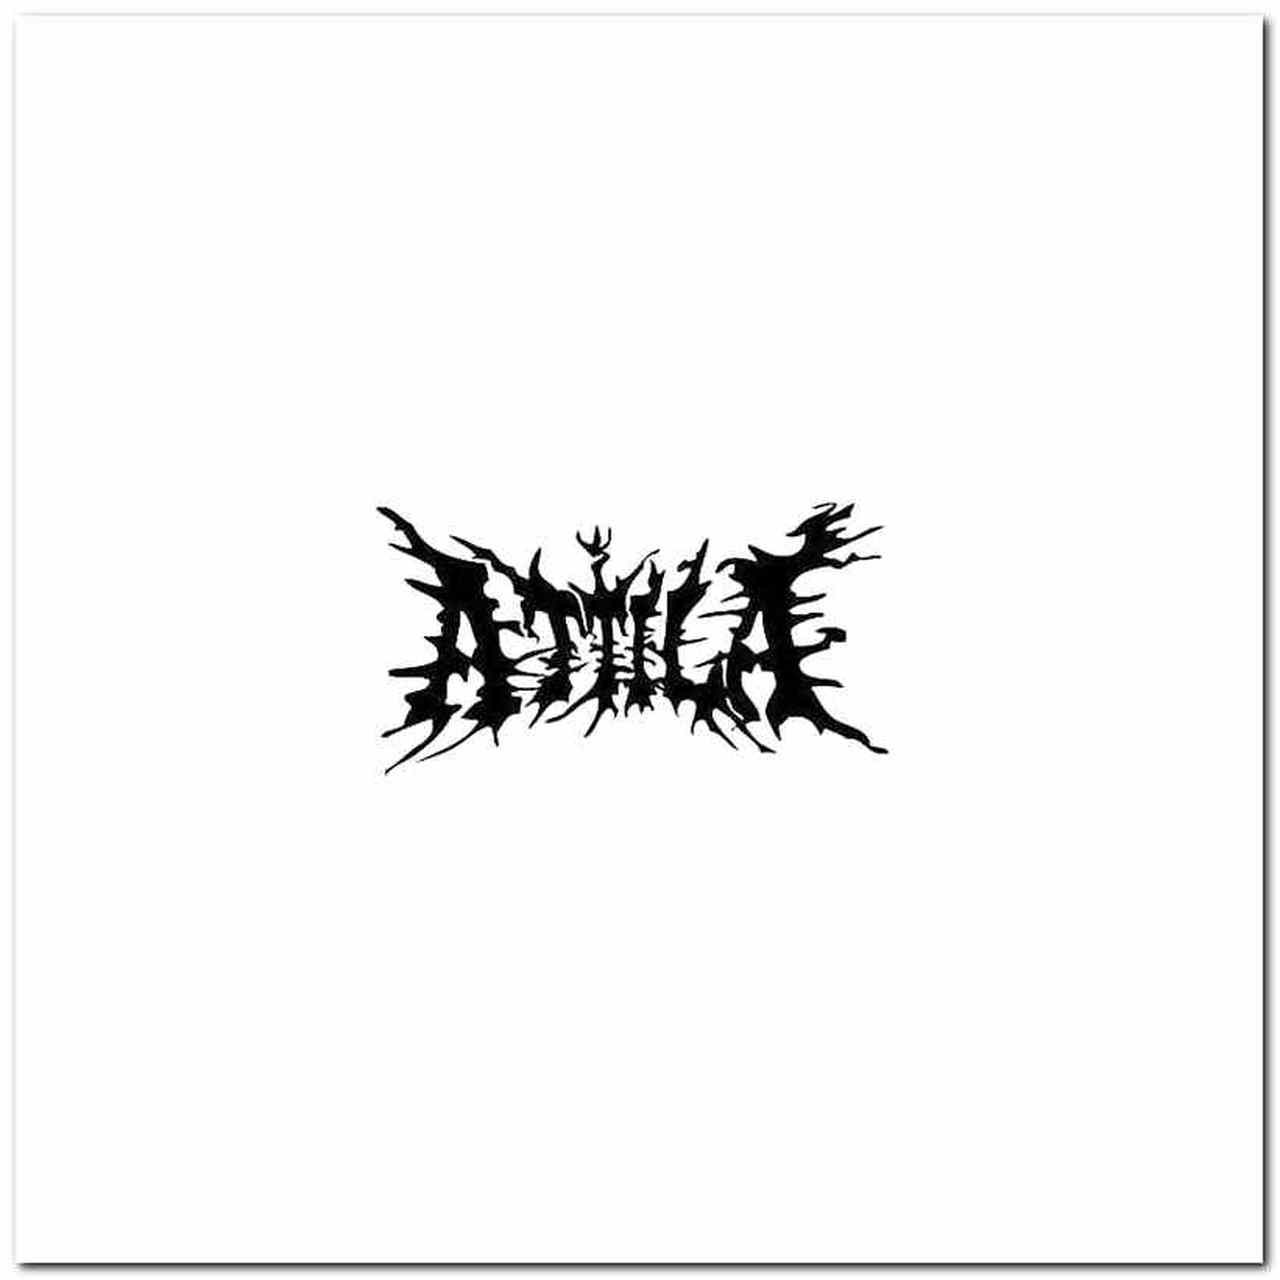 Attila Logo - Attila Band Decal Sticker